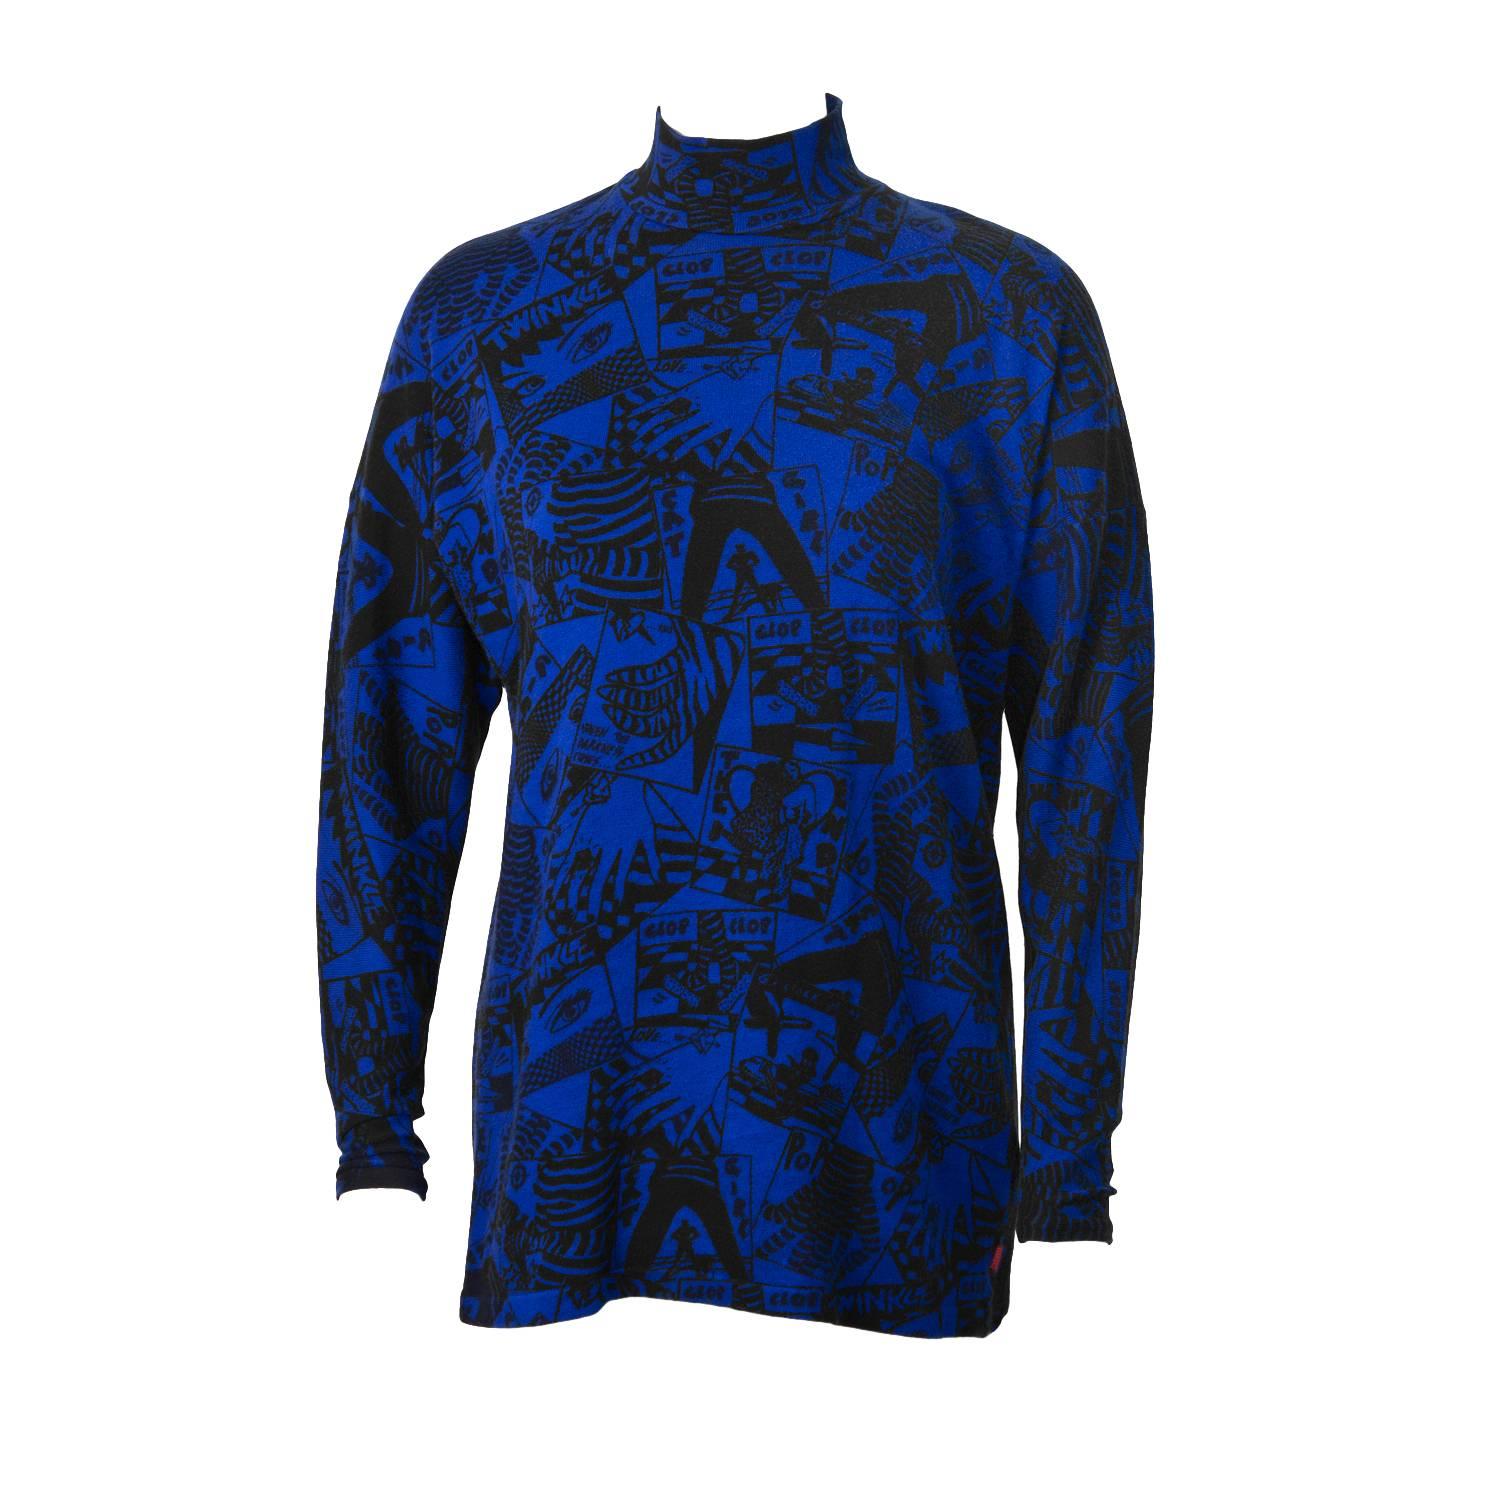 Early 1980's Fiorucci Blue Graphic Sweater 